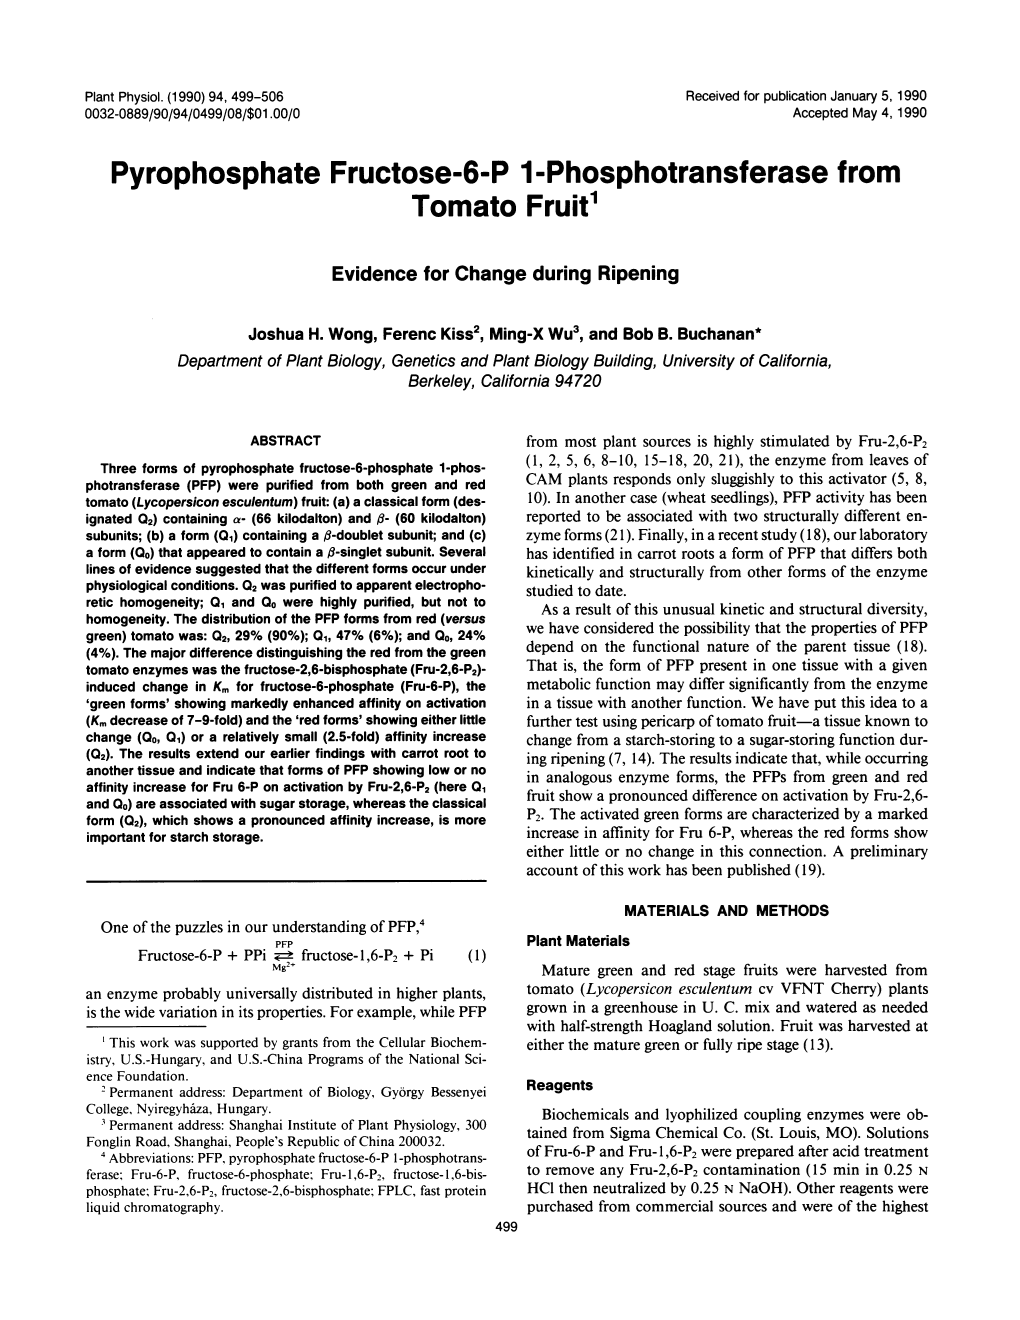 Pyrophosphate Fructose-6-P 1-Phosphotransferase from Tomato Fruit1